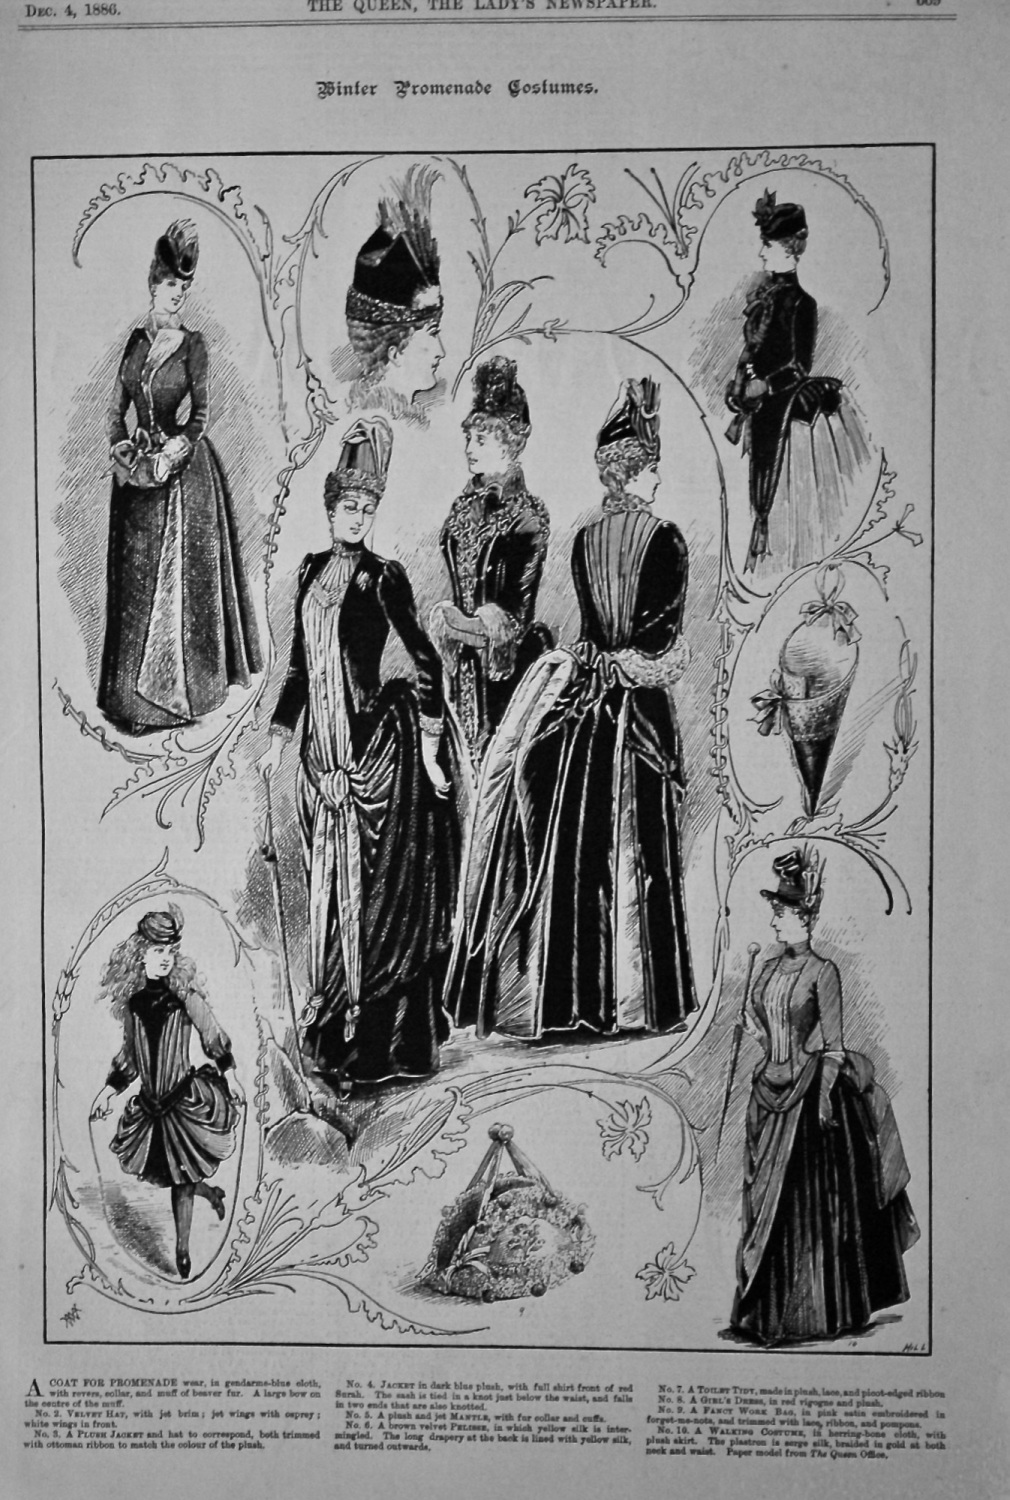 Winter Promenade Costumes.  1886.